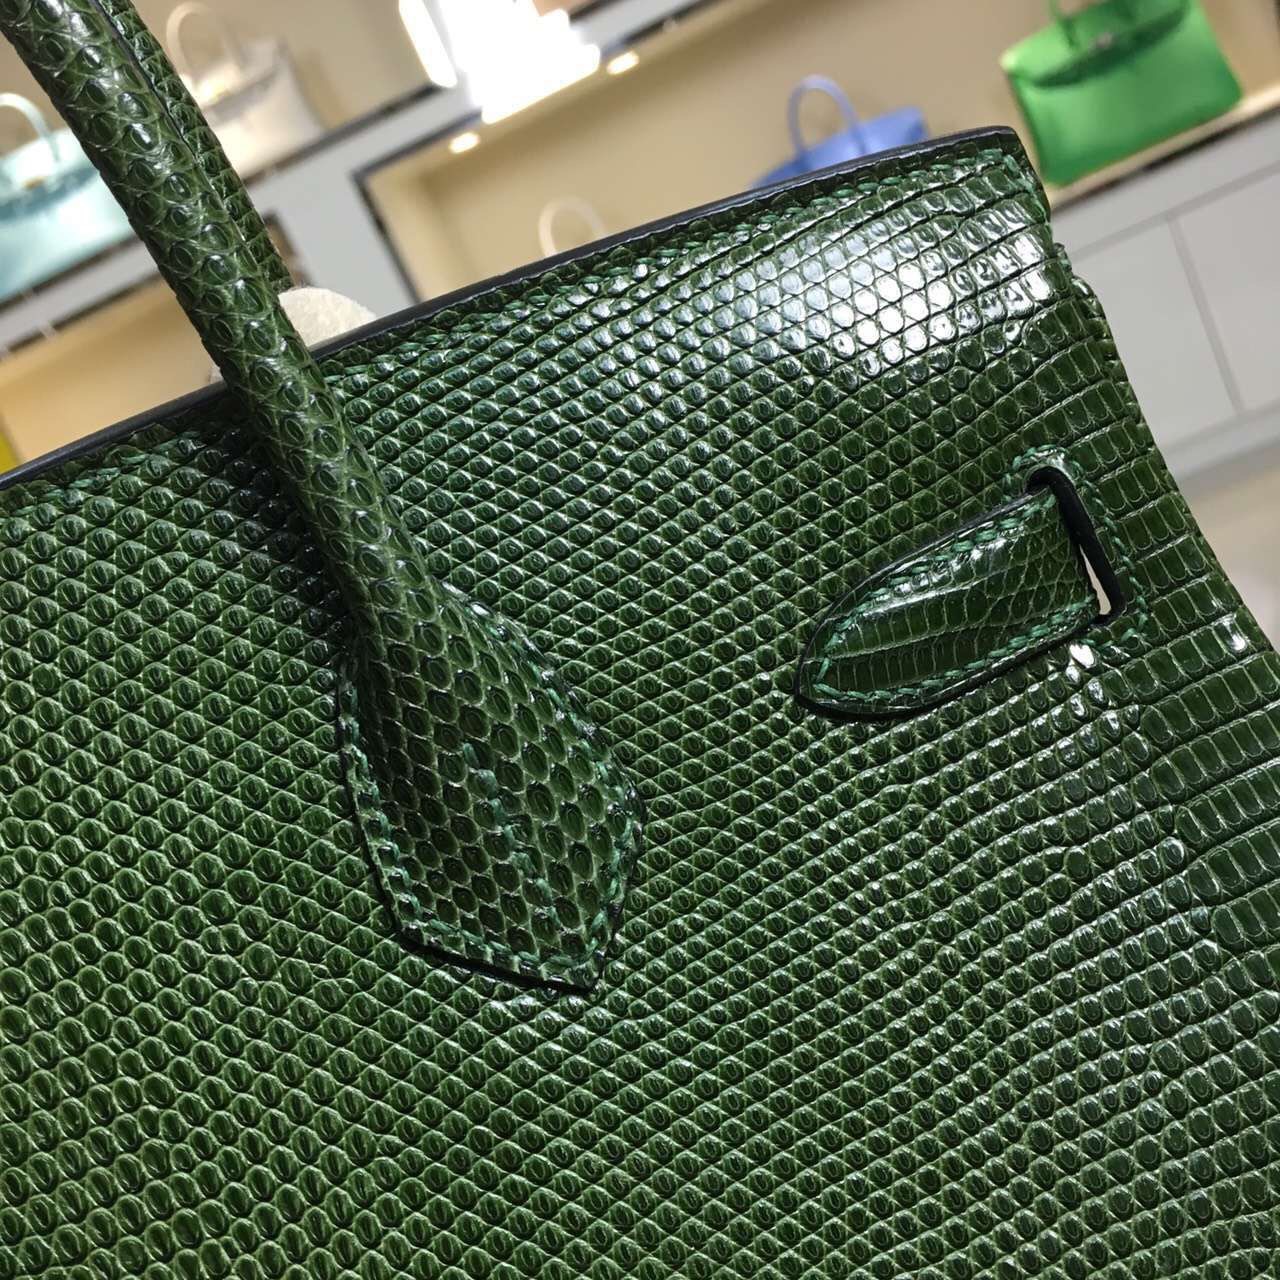 Hand Stitching Hermes Original Lizard Skin Birkin Bag 30CM in Dark Green